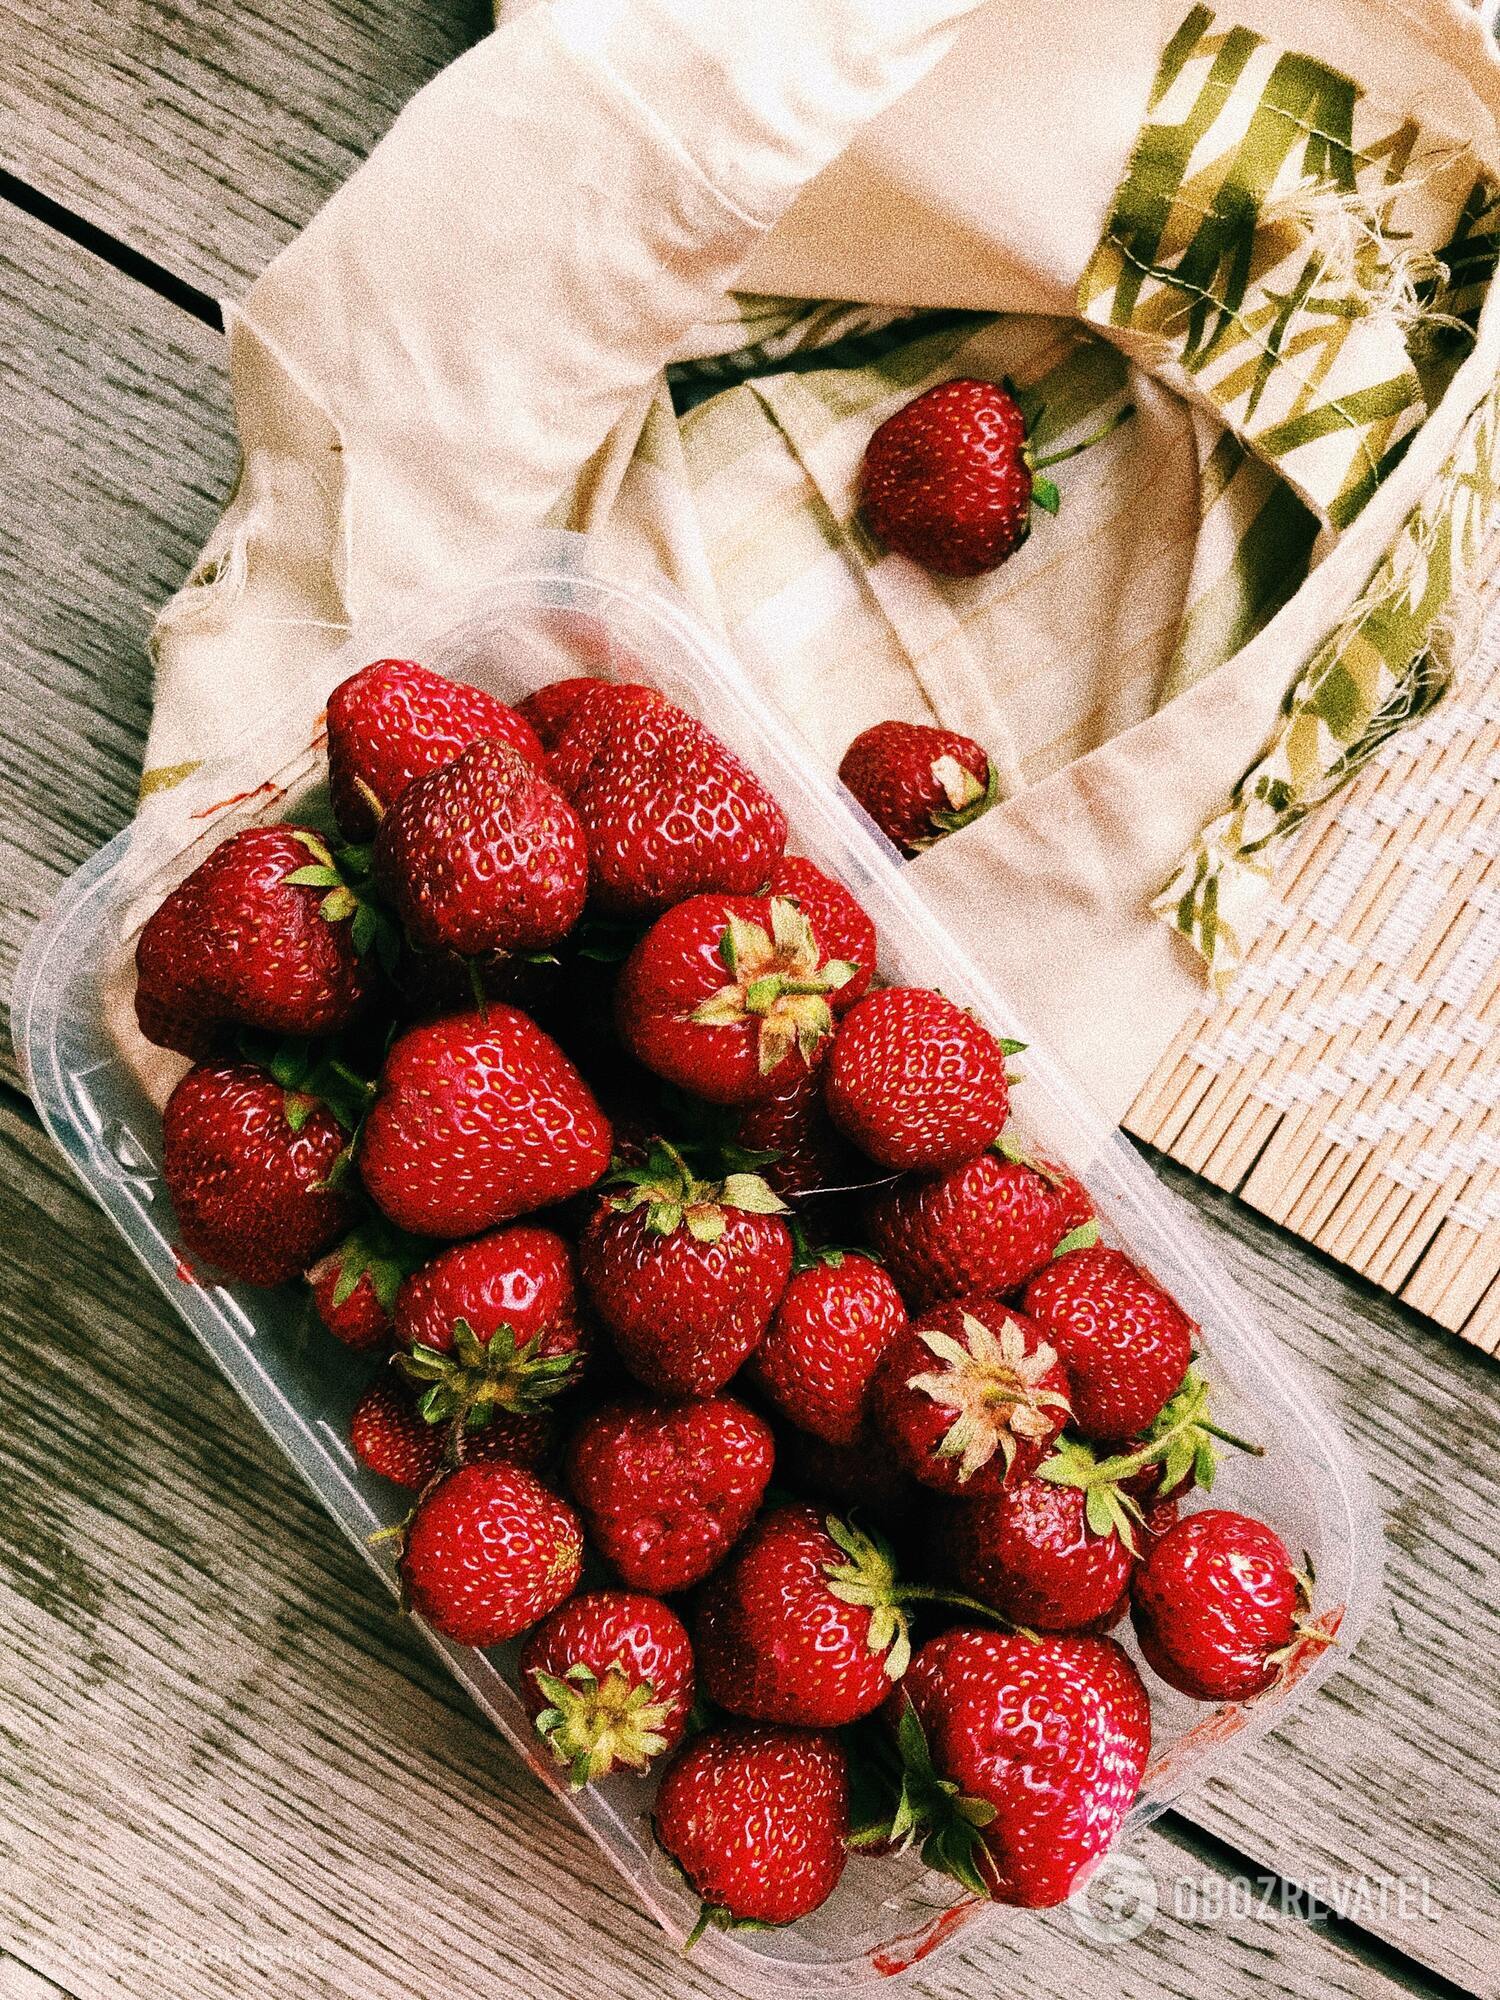 Fresh strawberries for freezing